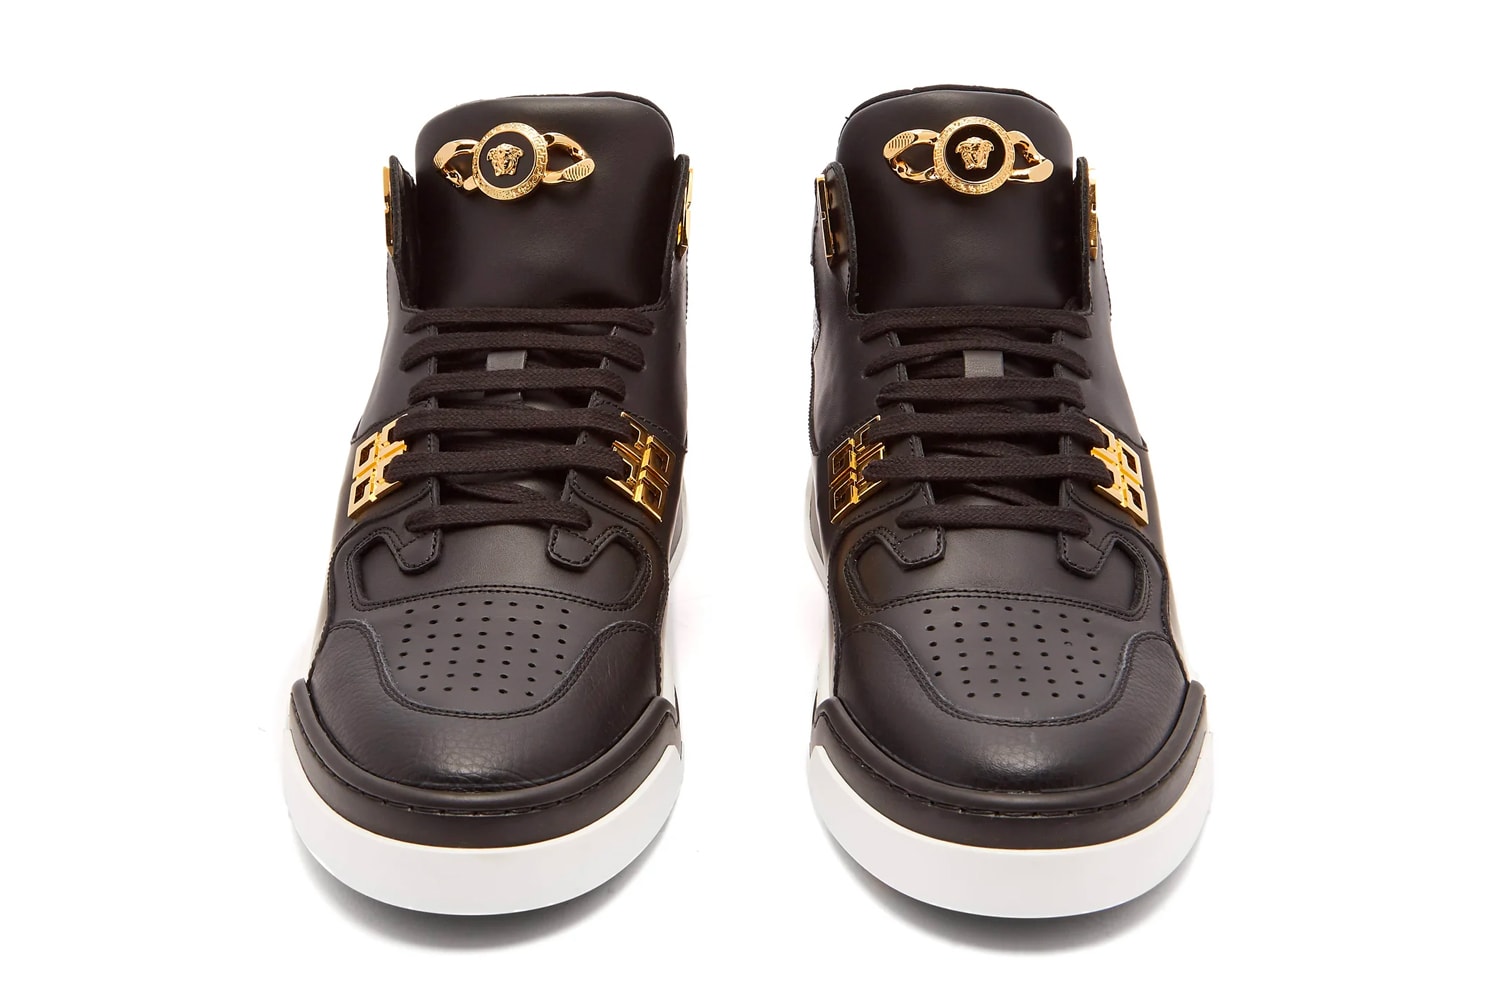 Versace Medusa Embellished High Top Sneaker Release White Blue Black Gold matchesfashion.com Head Info